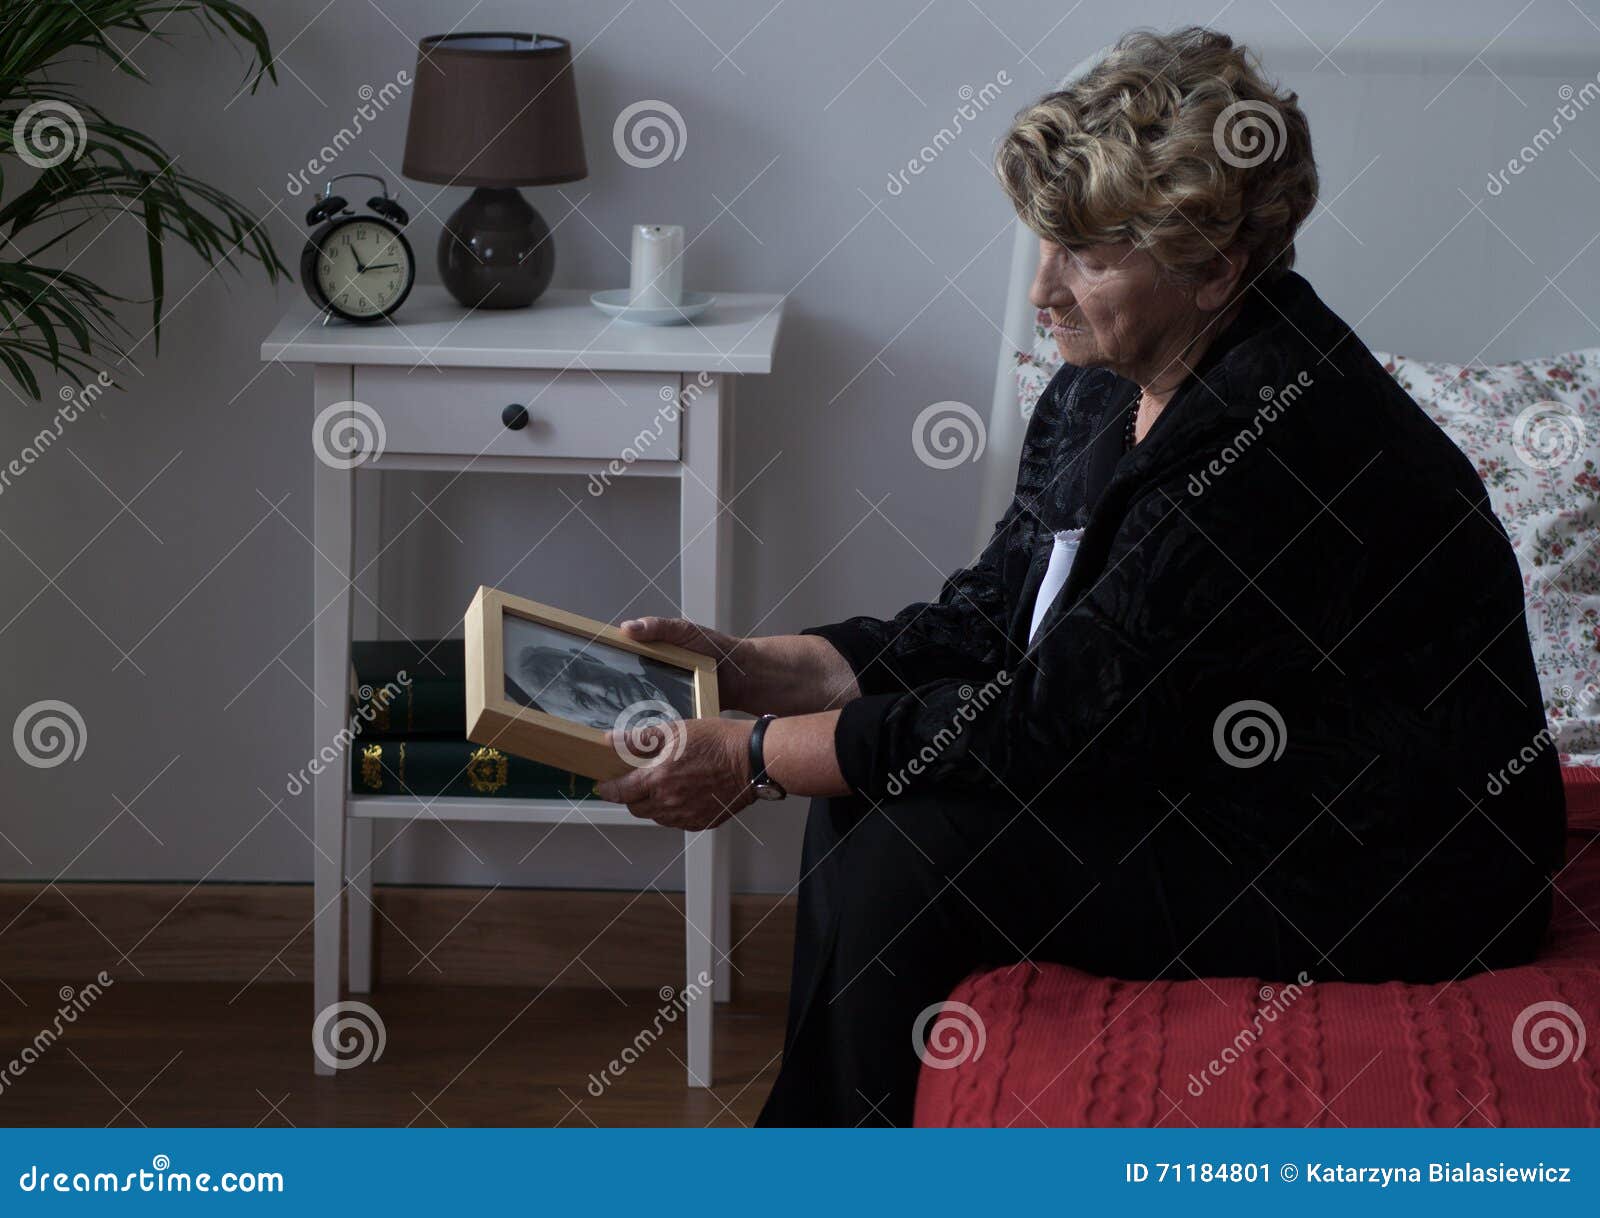 elderly widowed lady in grief